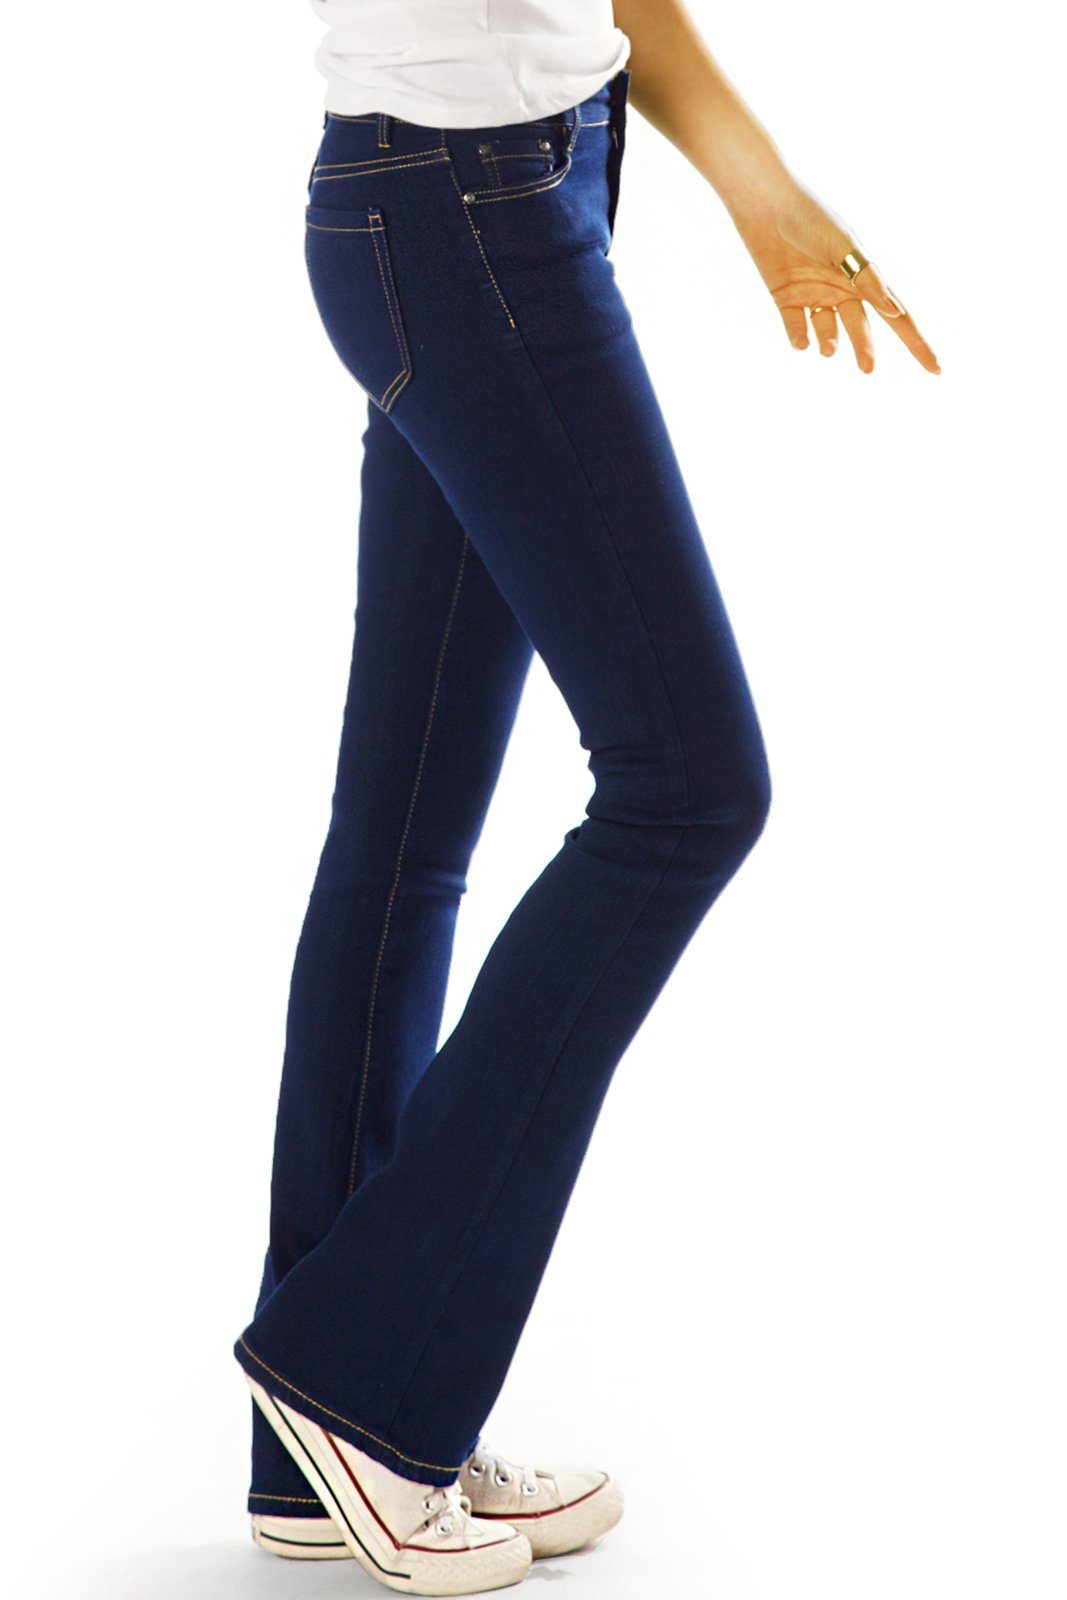 be 5-Pocket-Style Stretchjeans Jeanshose -j18g styled blau Stretch-Anteil, Bootcut-Jeans mit Hüftjeans Bootcut Damen -